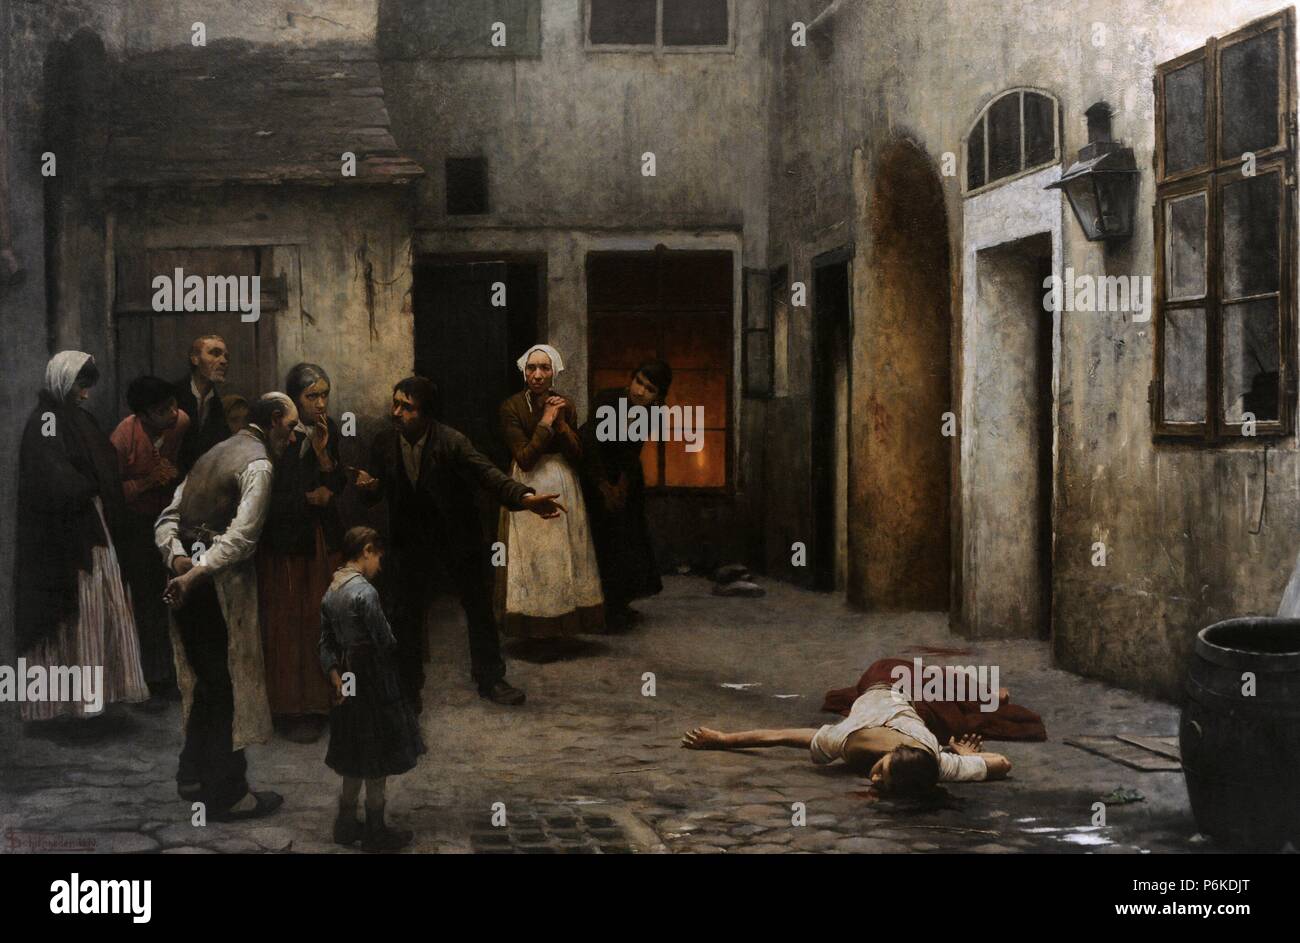 ARTE SIGLO XIX. JAKUB SCHIKANEDER (1855-1924). Pintor checo. 'Asesinato en la casa', 1890. Oleo sobre lienzo. Galería Nacional de Praga. República Checa. Stock Photo